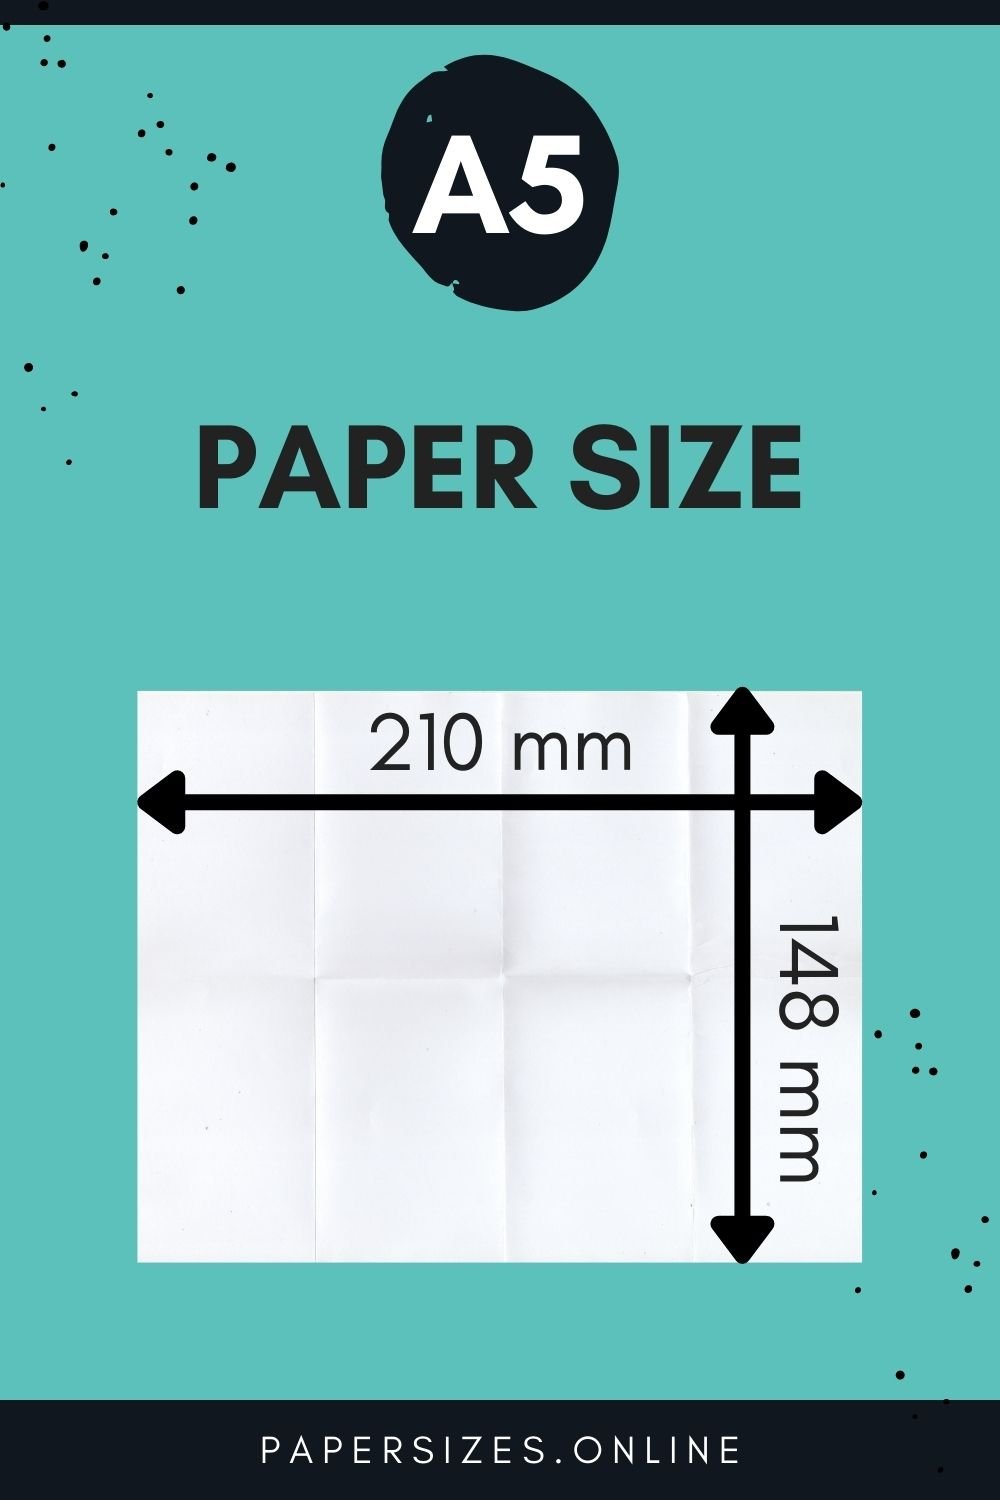 A5 Paper Size Dimensions